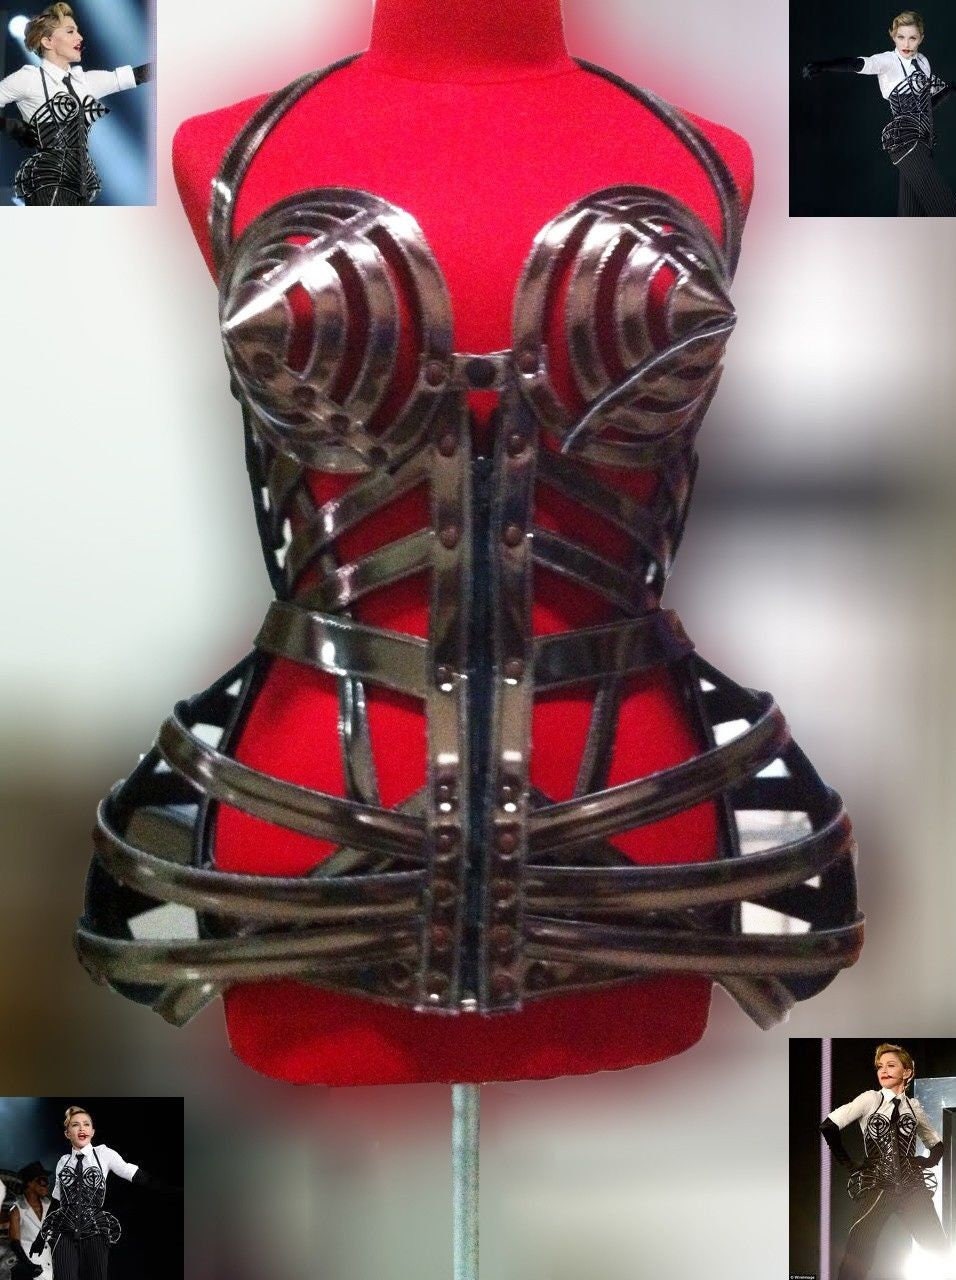 Daneena T029E Tribute Copy Cone Bra Pointy Cage Leather Madonna Costume  XS-XL -  Denmark